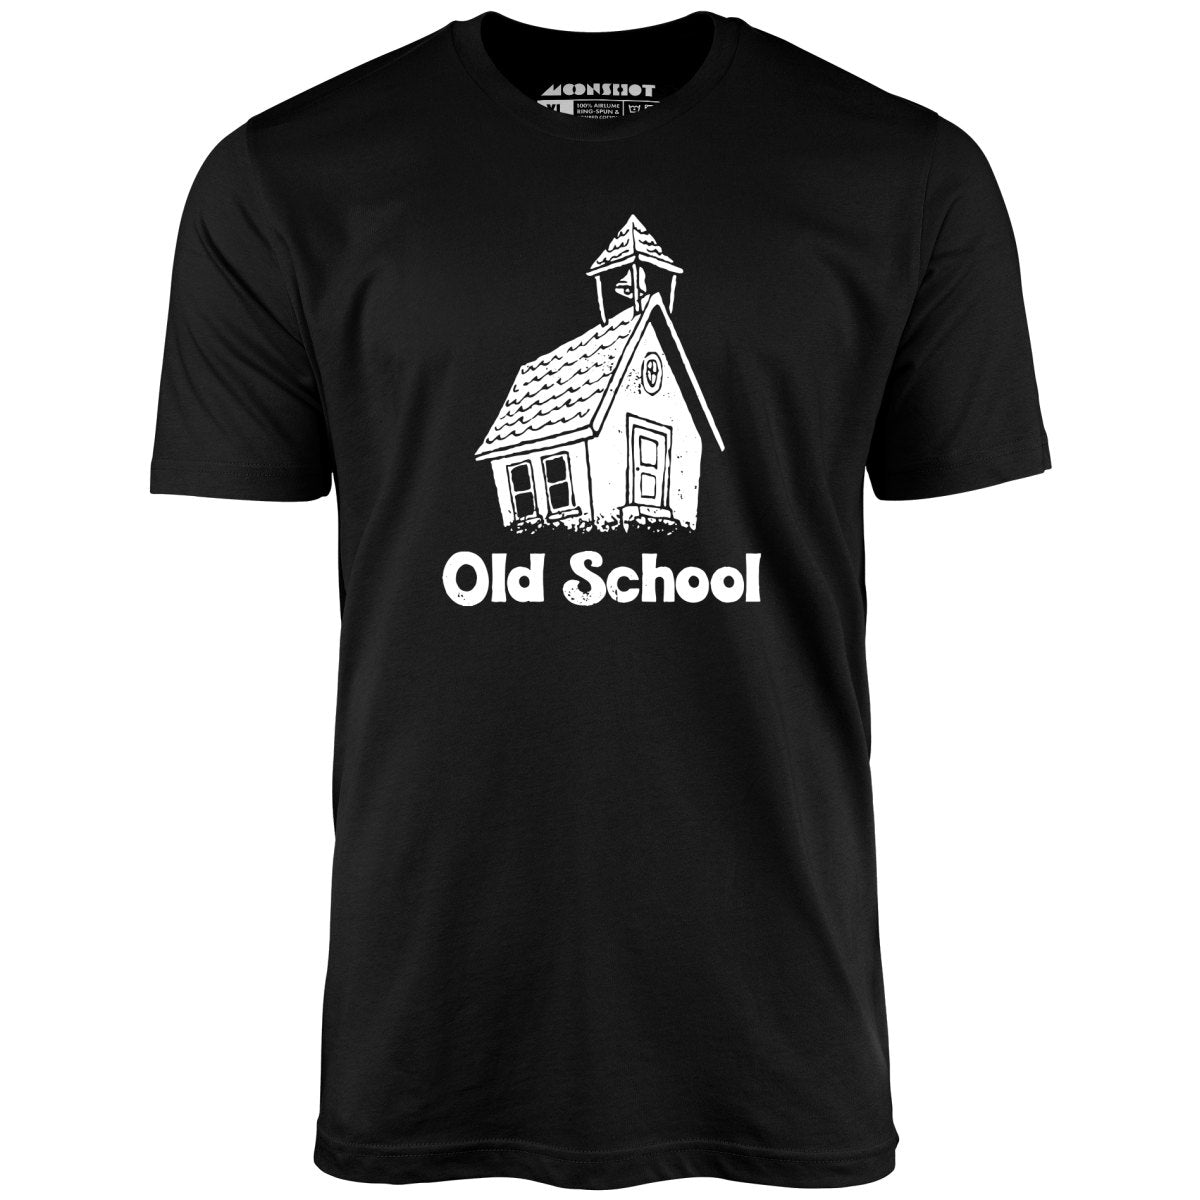 Old School - Unisex T-Shirt